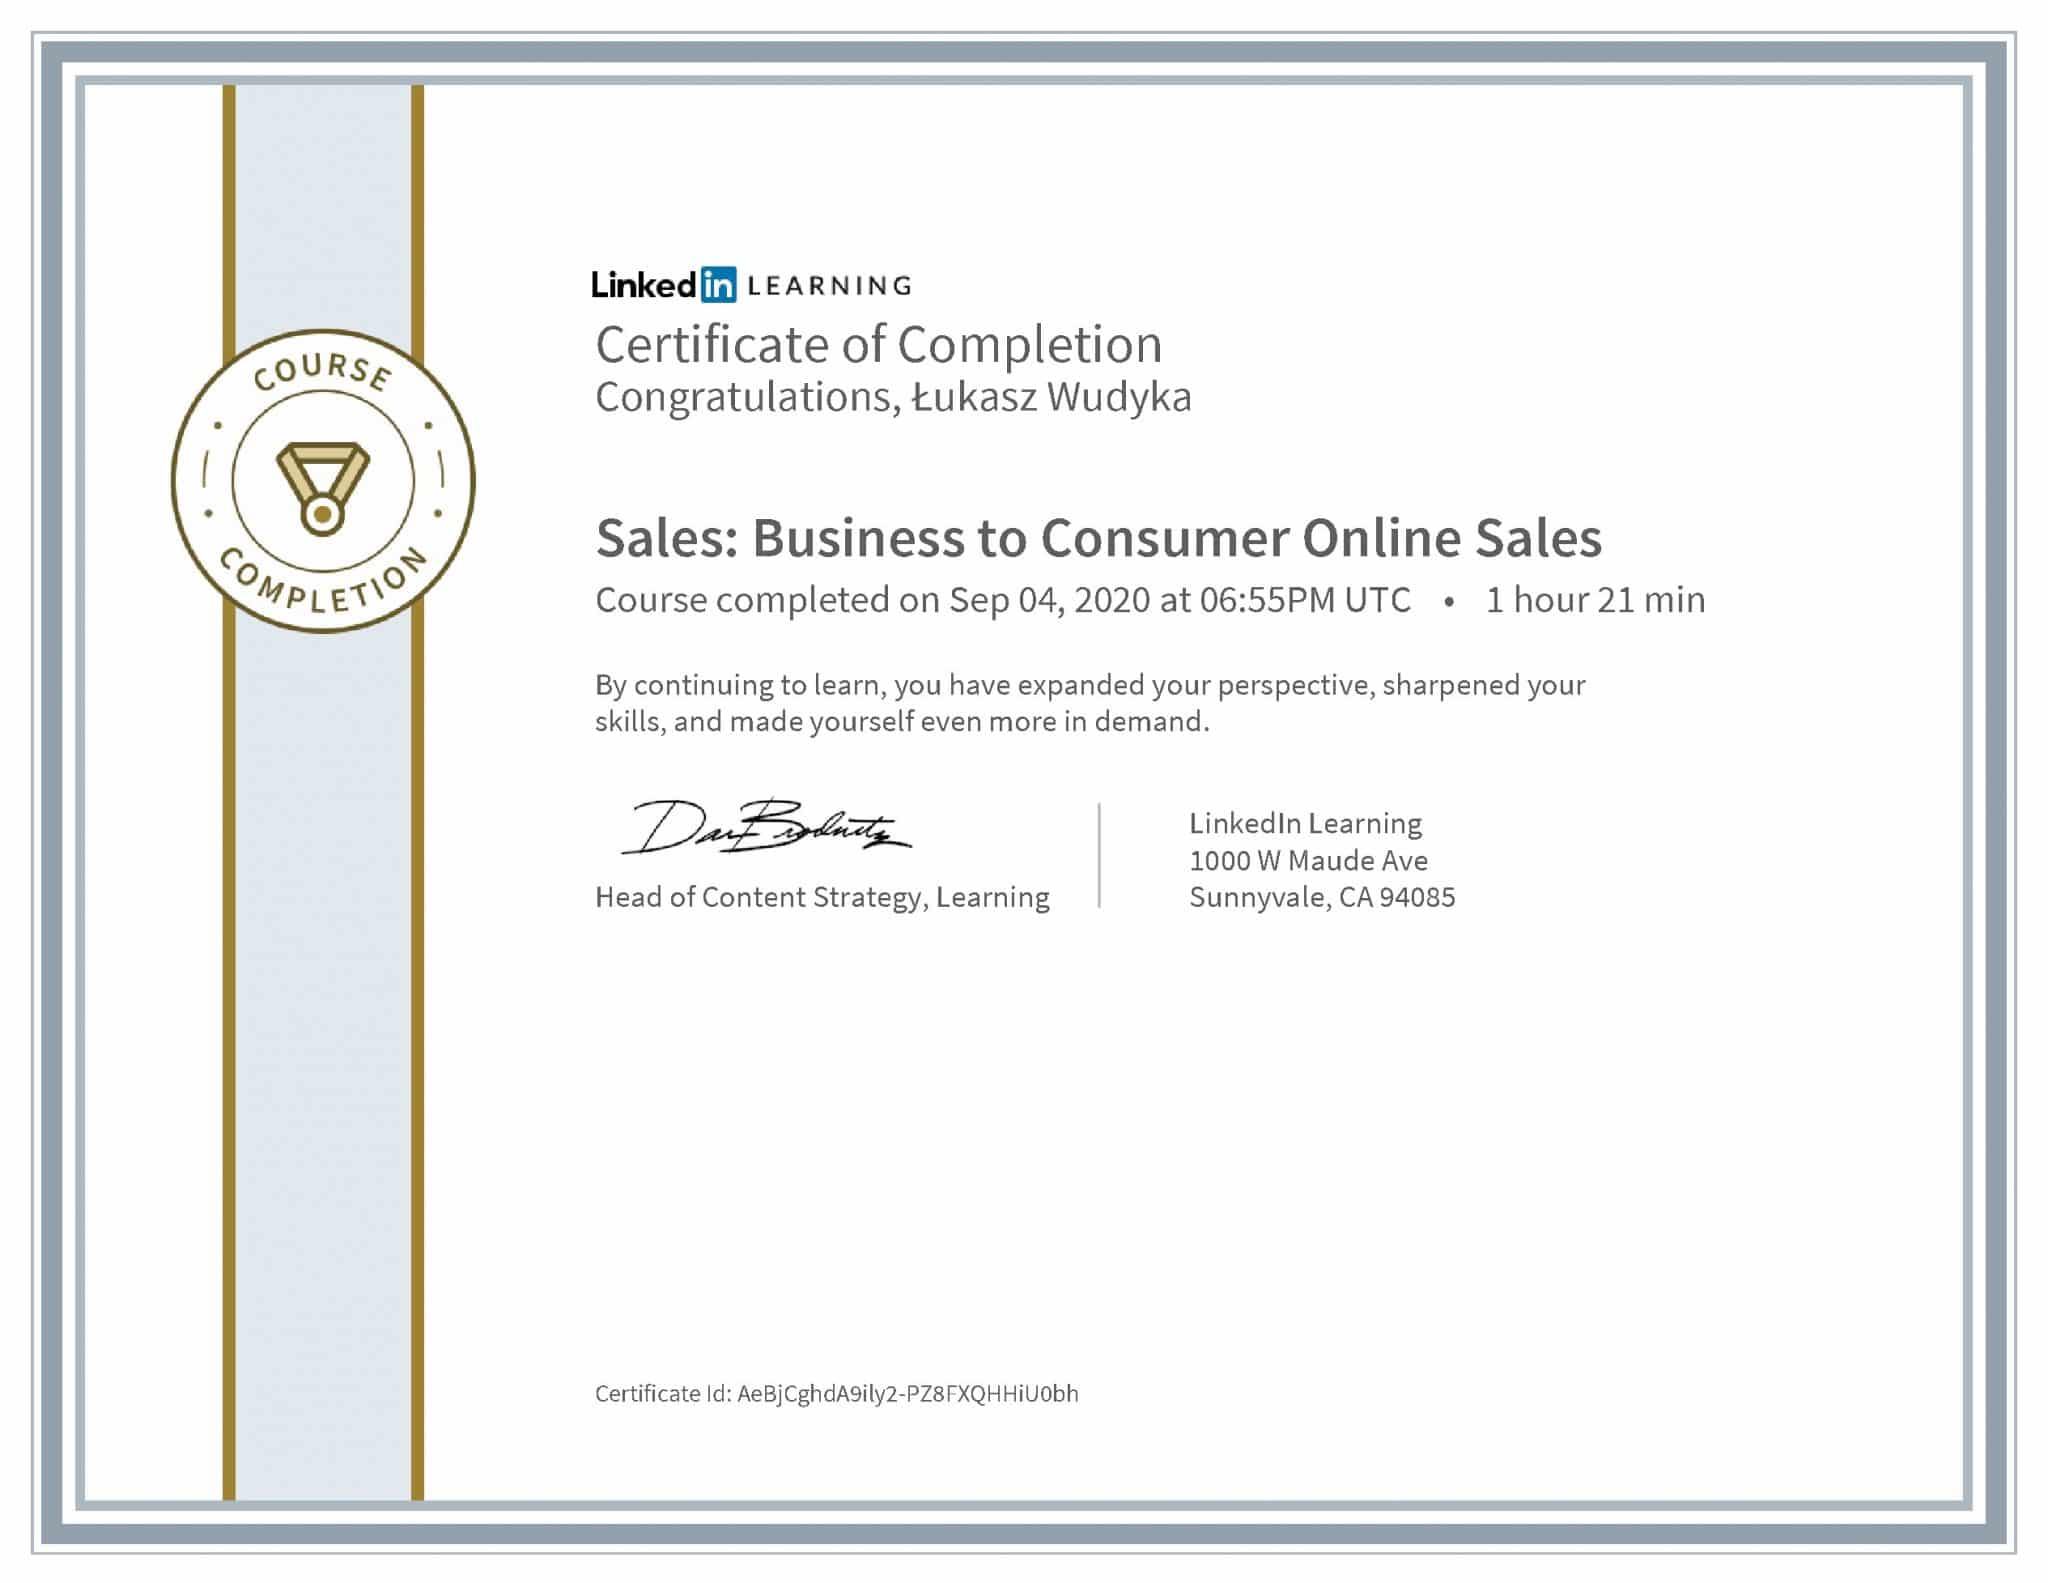 Łukasz Wudyka certyfikat LinkedIn Sales: Business to Consumer Online Sales